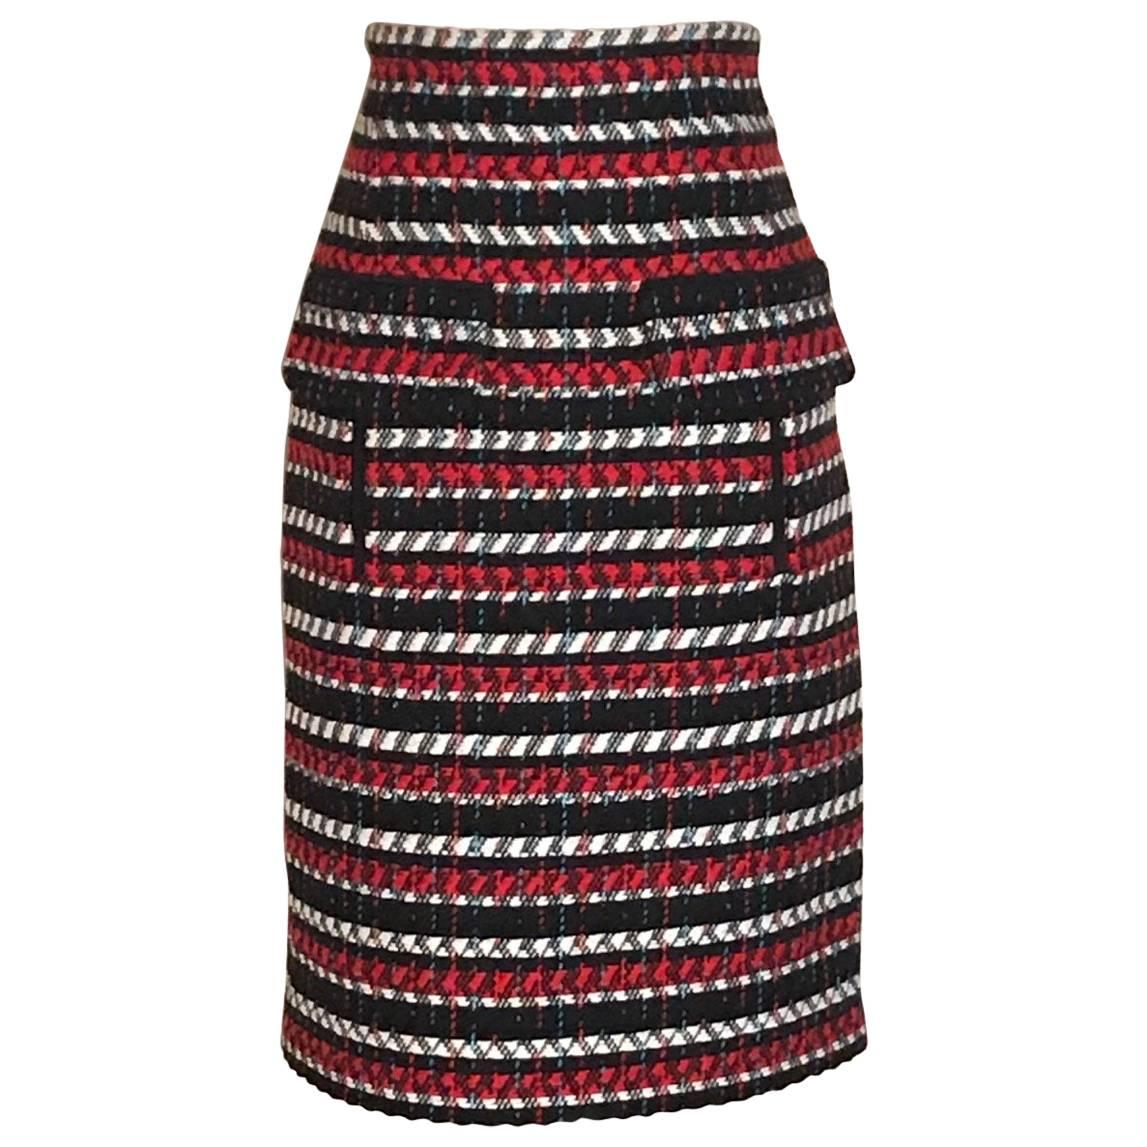 New Oscar de la Renta Runway Red White Black and Blue Pencil Skirt